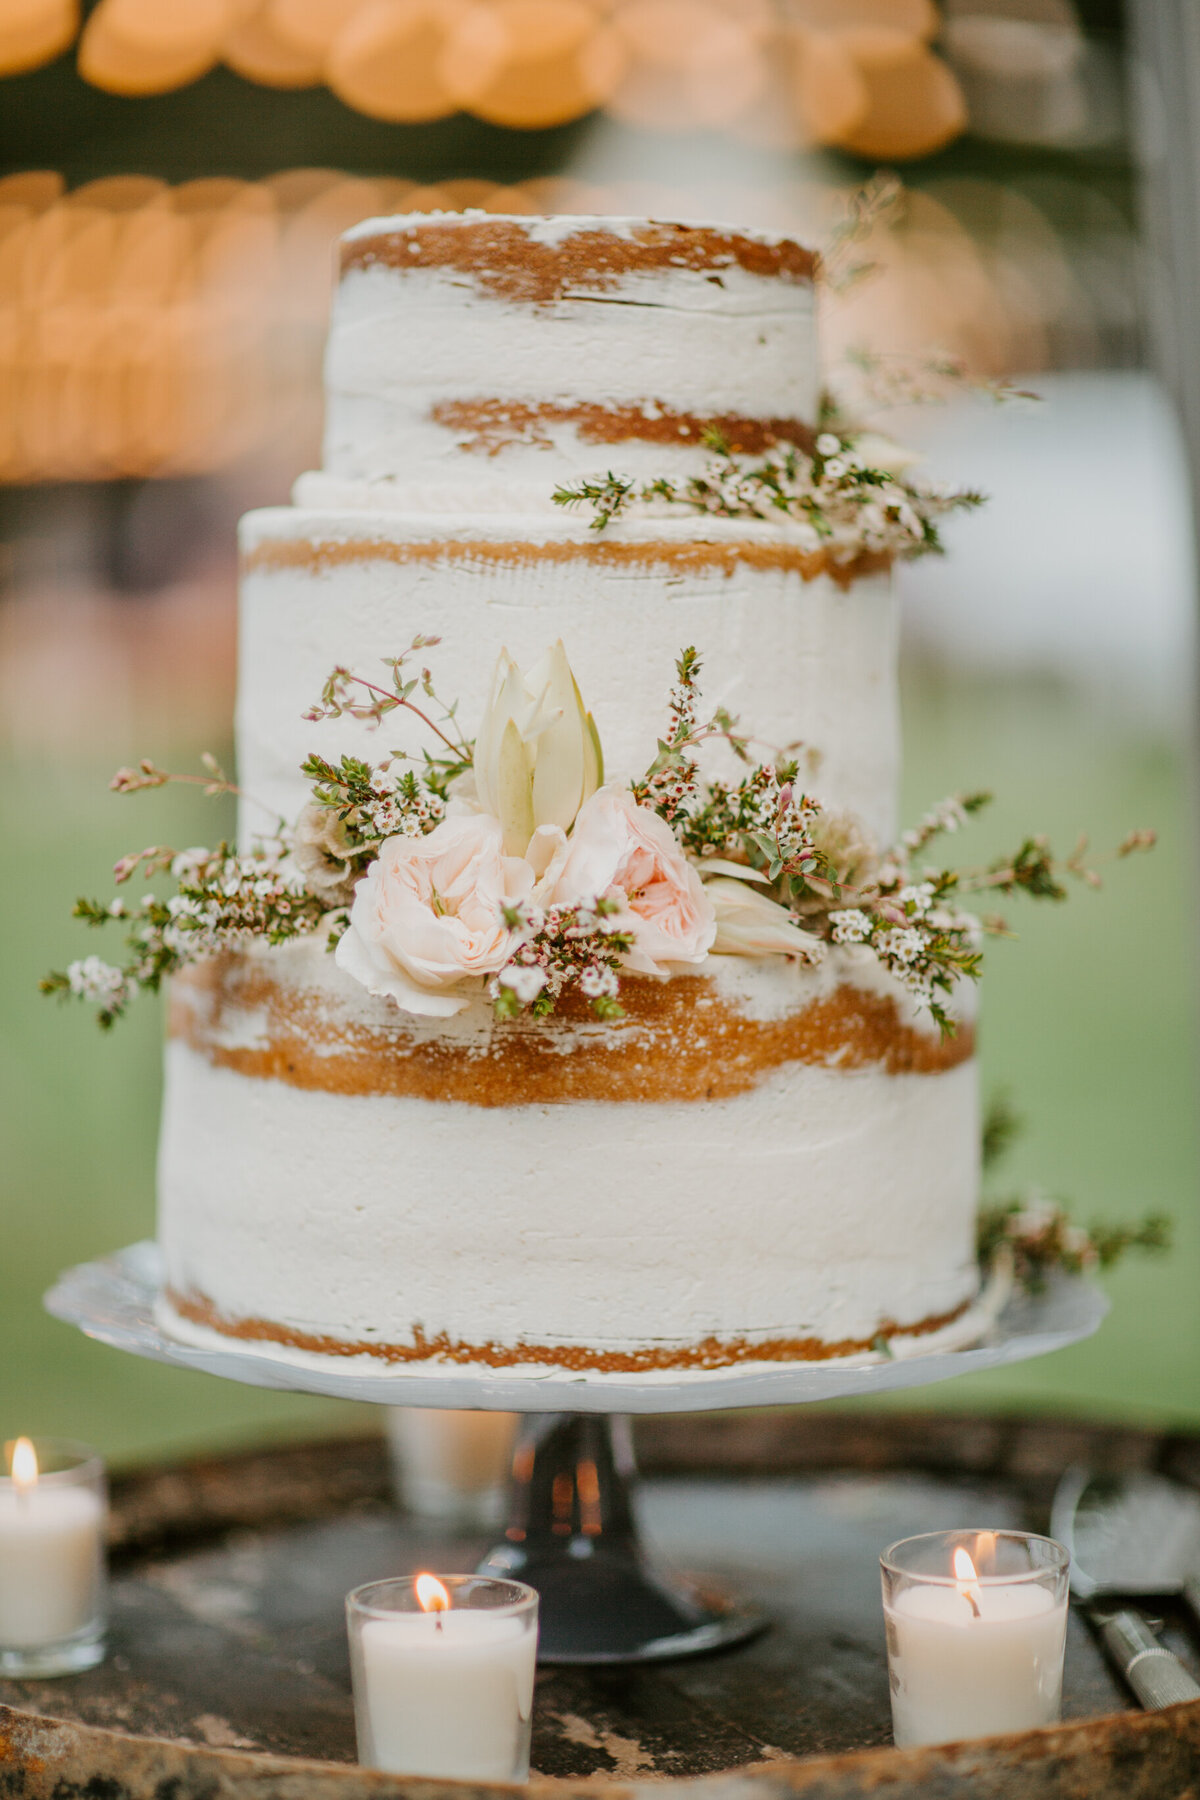 Rustic naked cake at glamping themed wedding